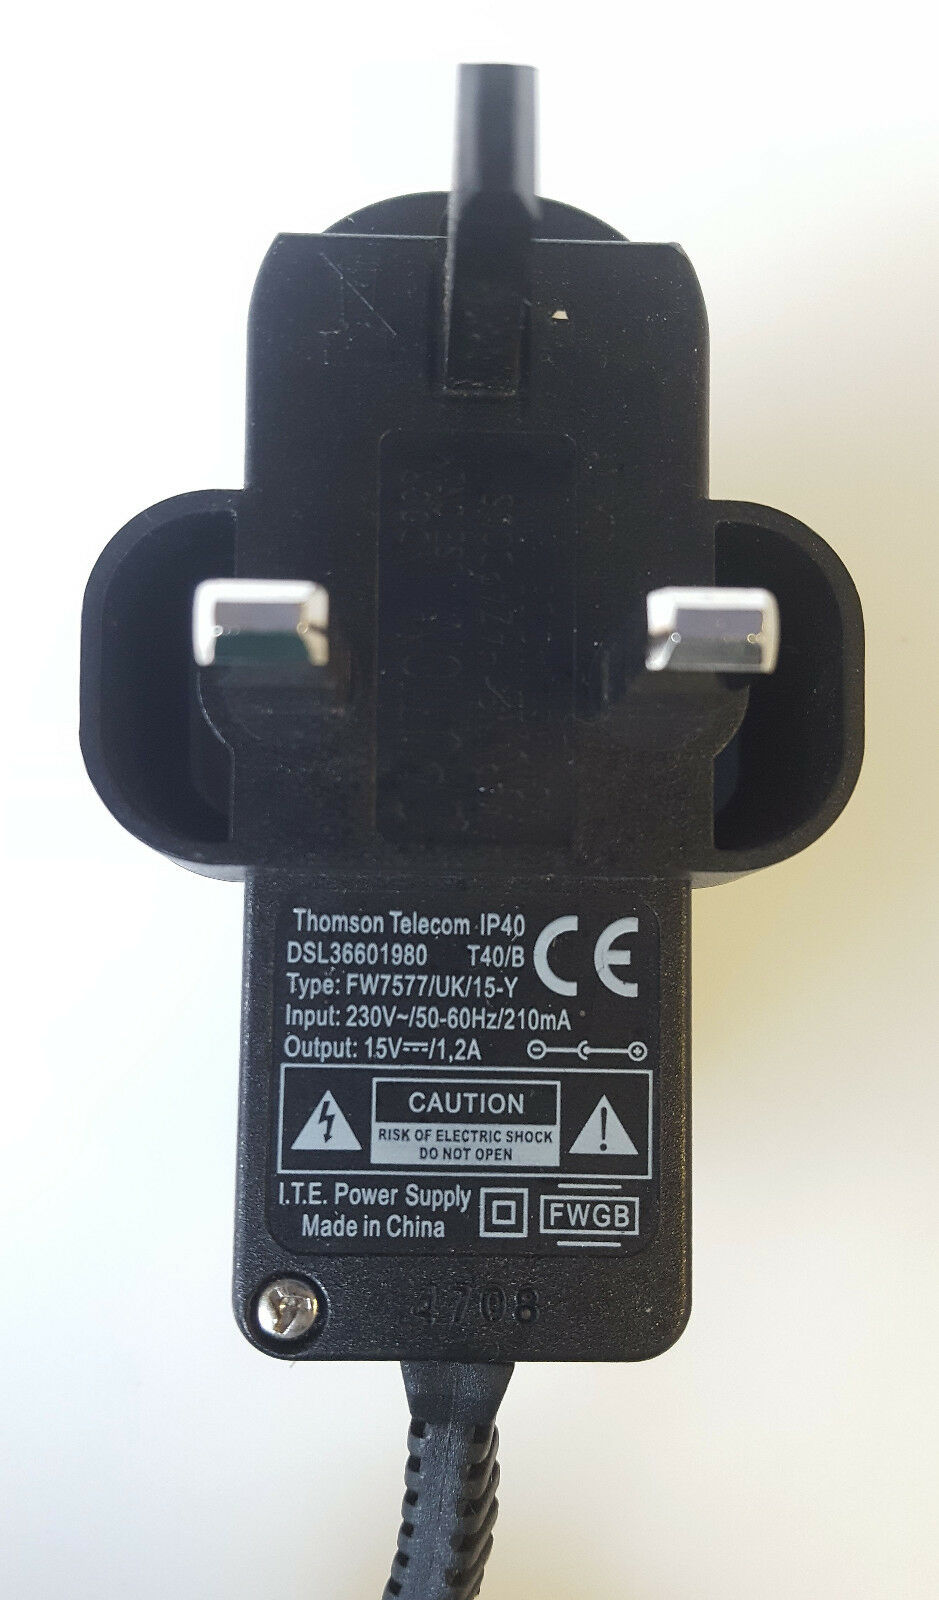 New THOMSON TELECOM IP40 FW7577/UK/15-Y DSL36601980 15V 1.2A UK PLUG